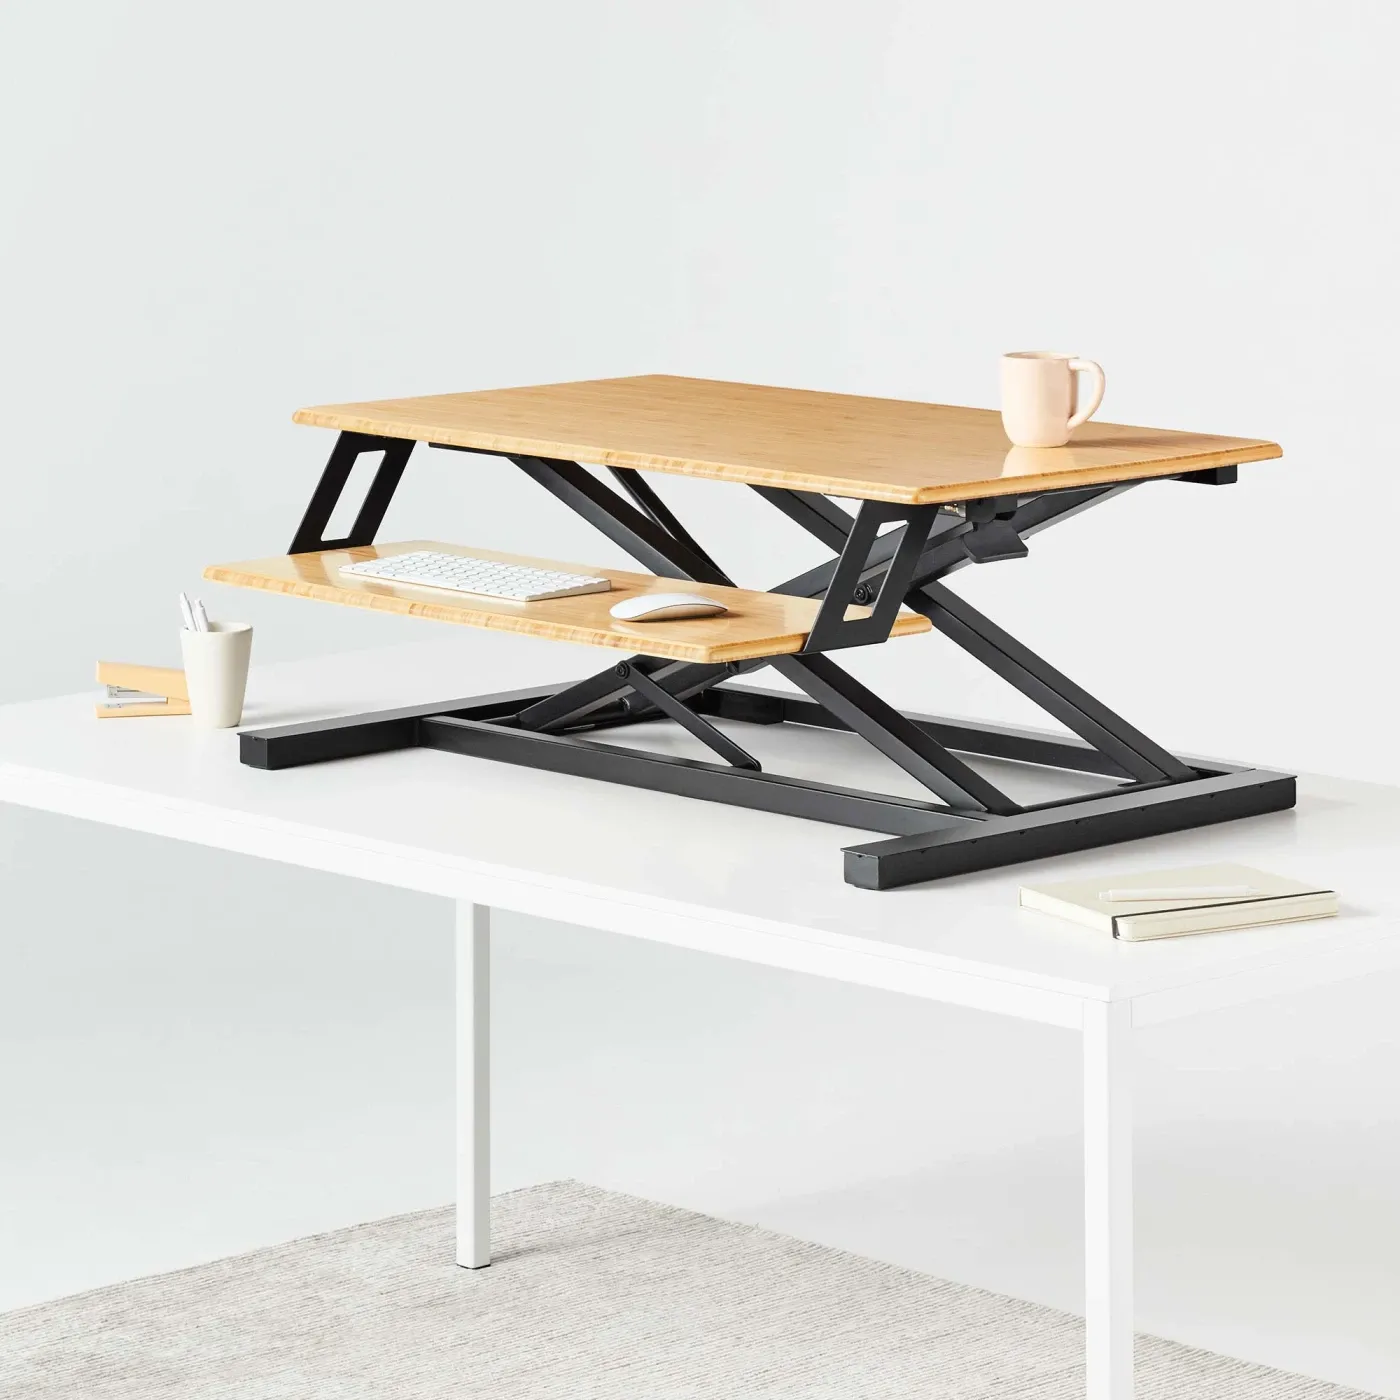 Standing desks for designers: 12 months later